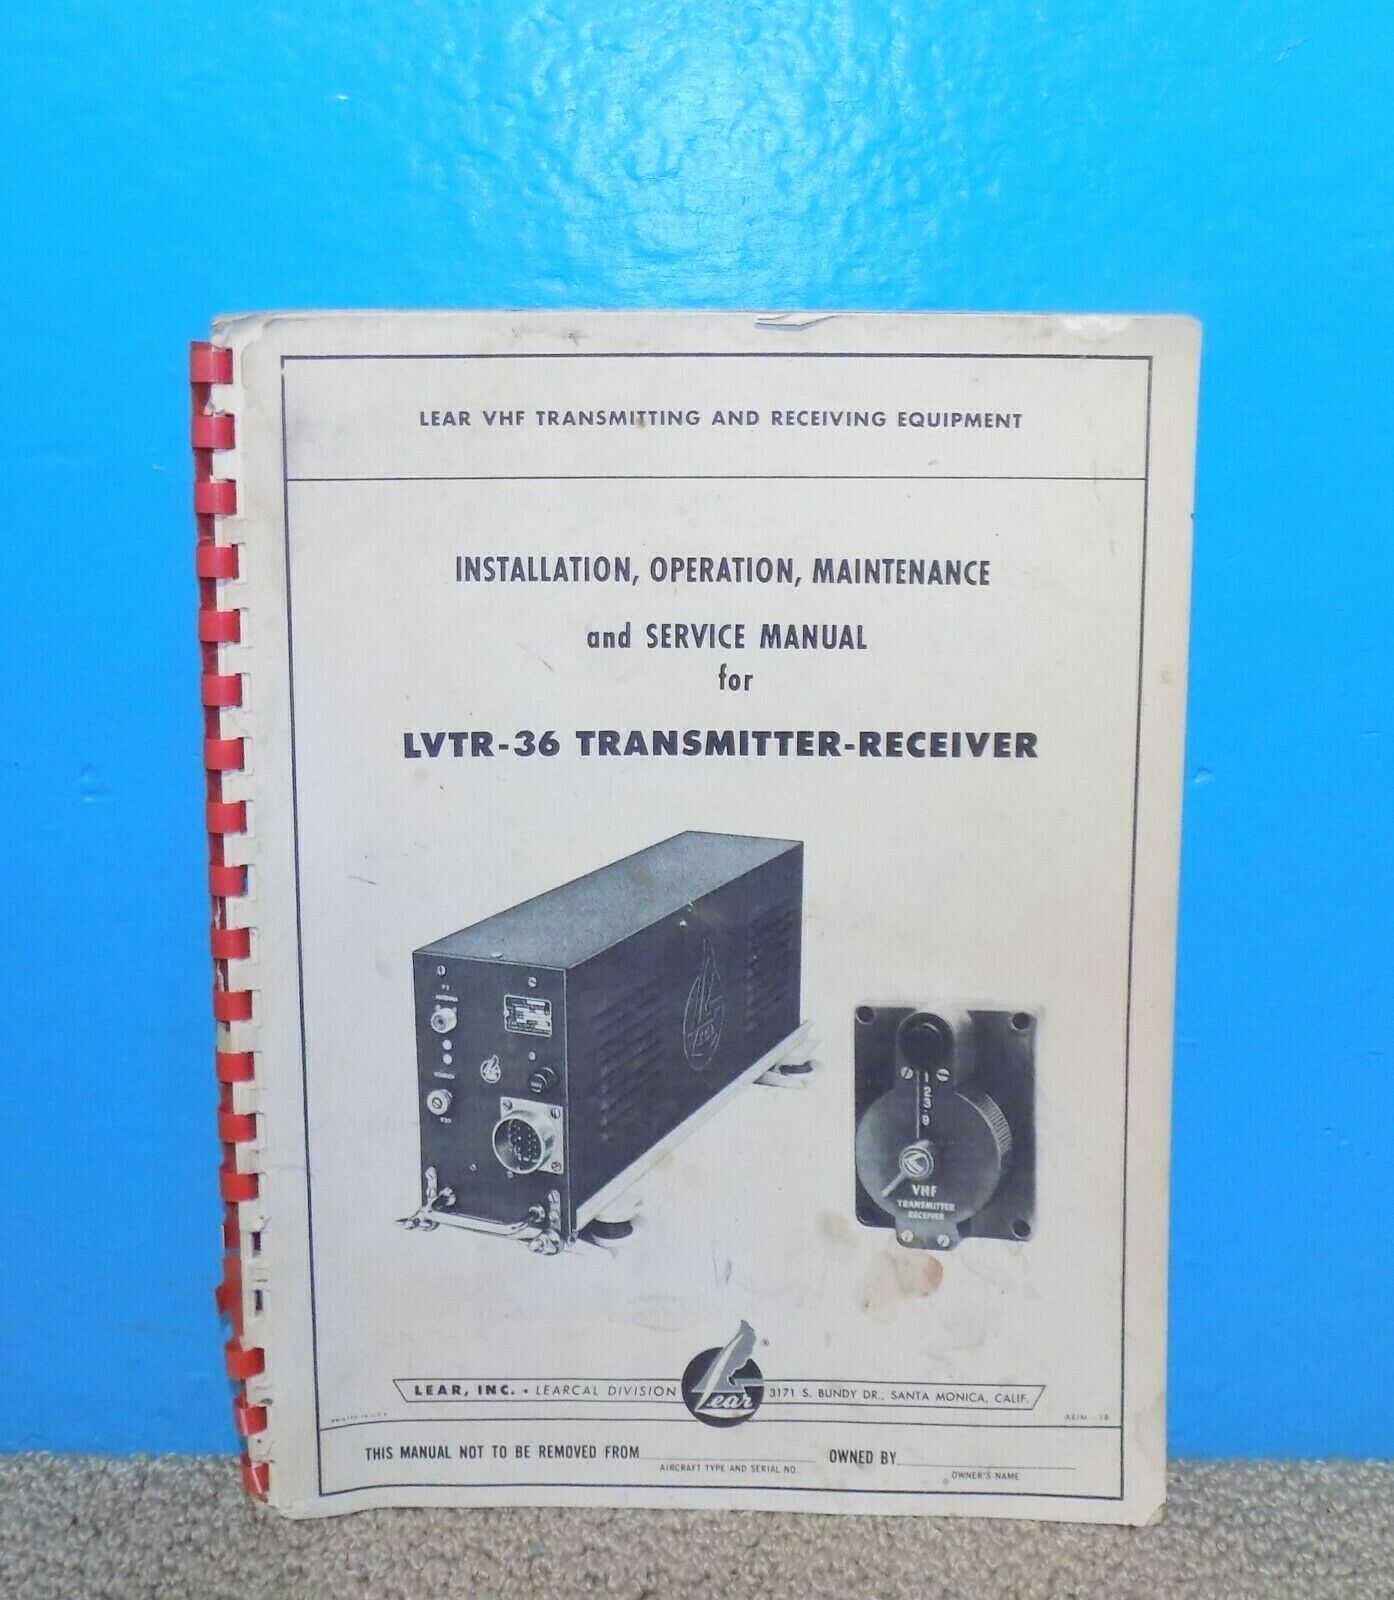 Original Lear Lvtr-36 Transmitter Receiver Installation Operation Service Manual